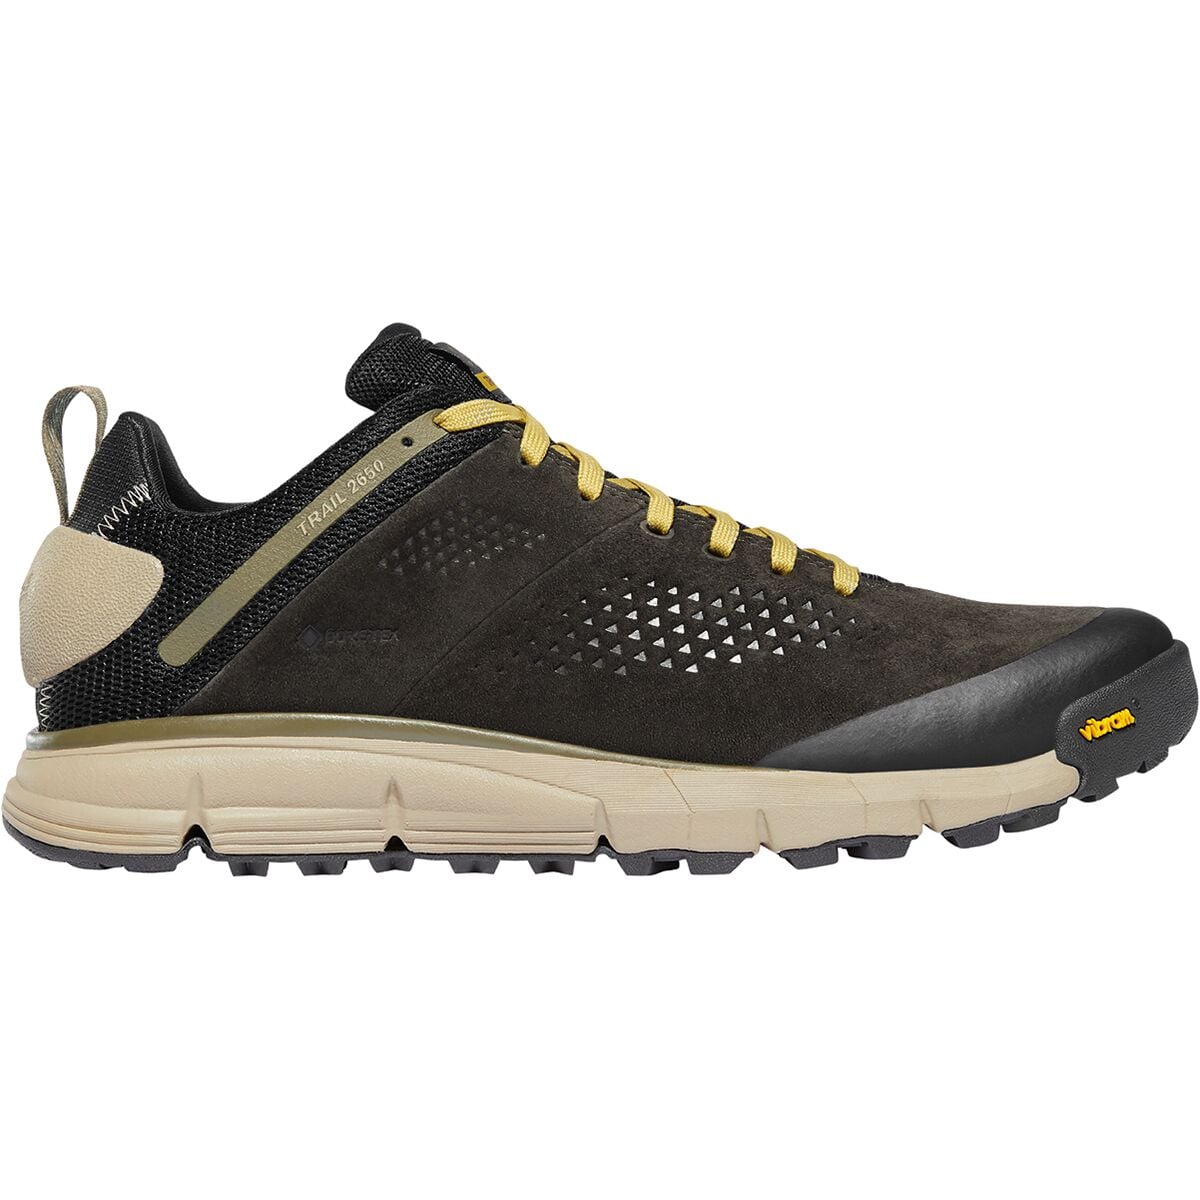 Danner Trail 2650 GTX Hiking Shoe - Men's